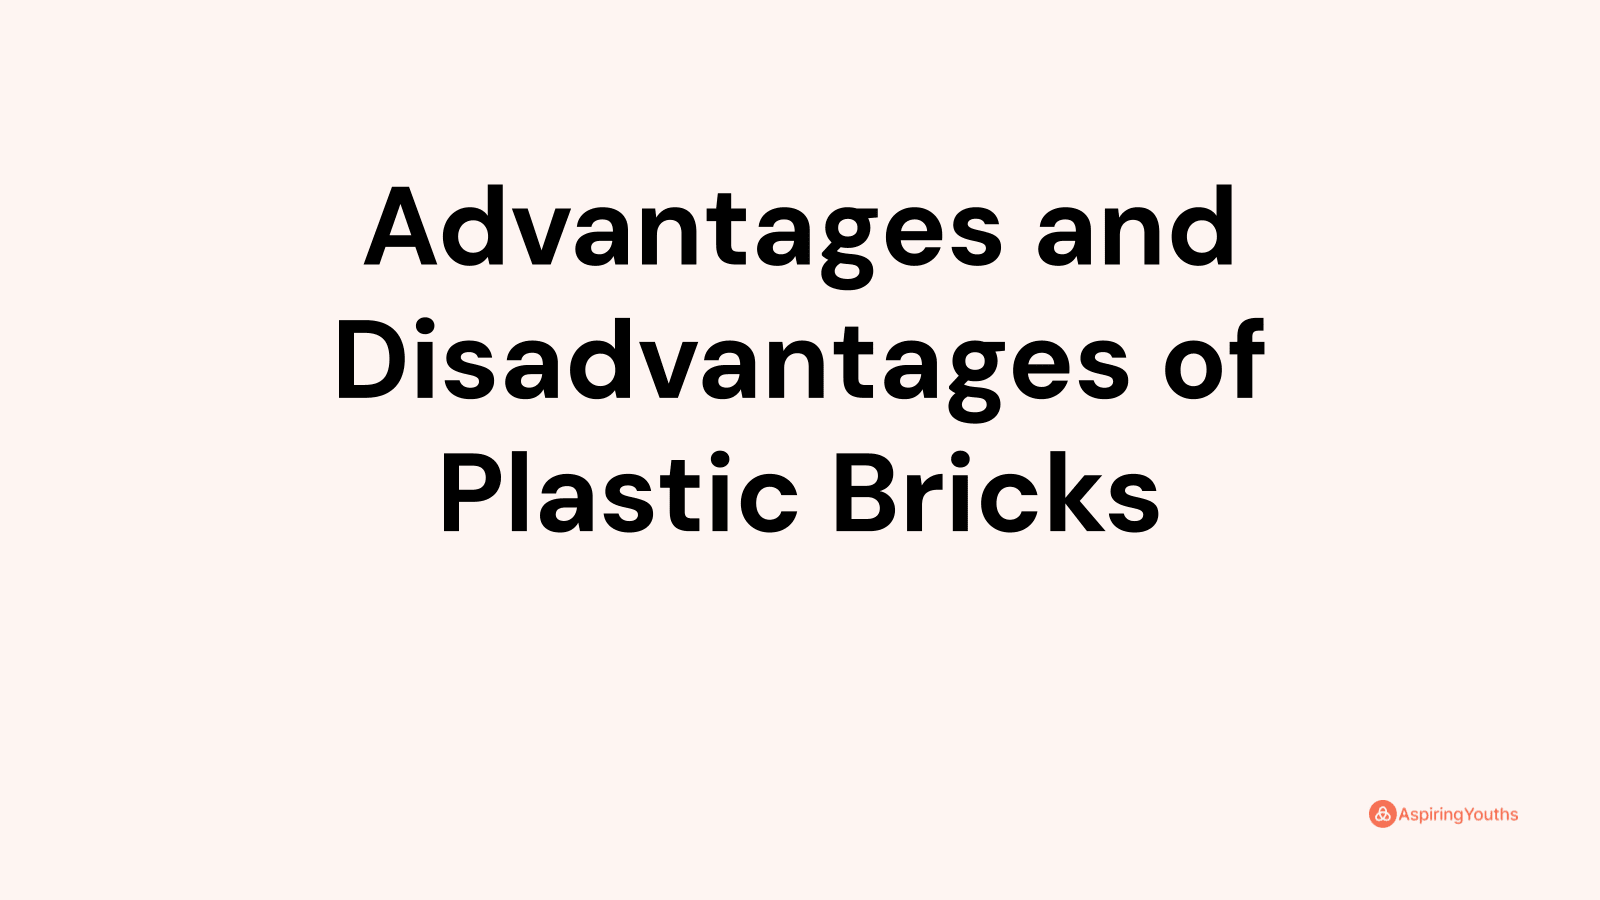 Advantages and disadvantages of Plastic Bricks